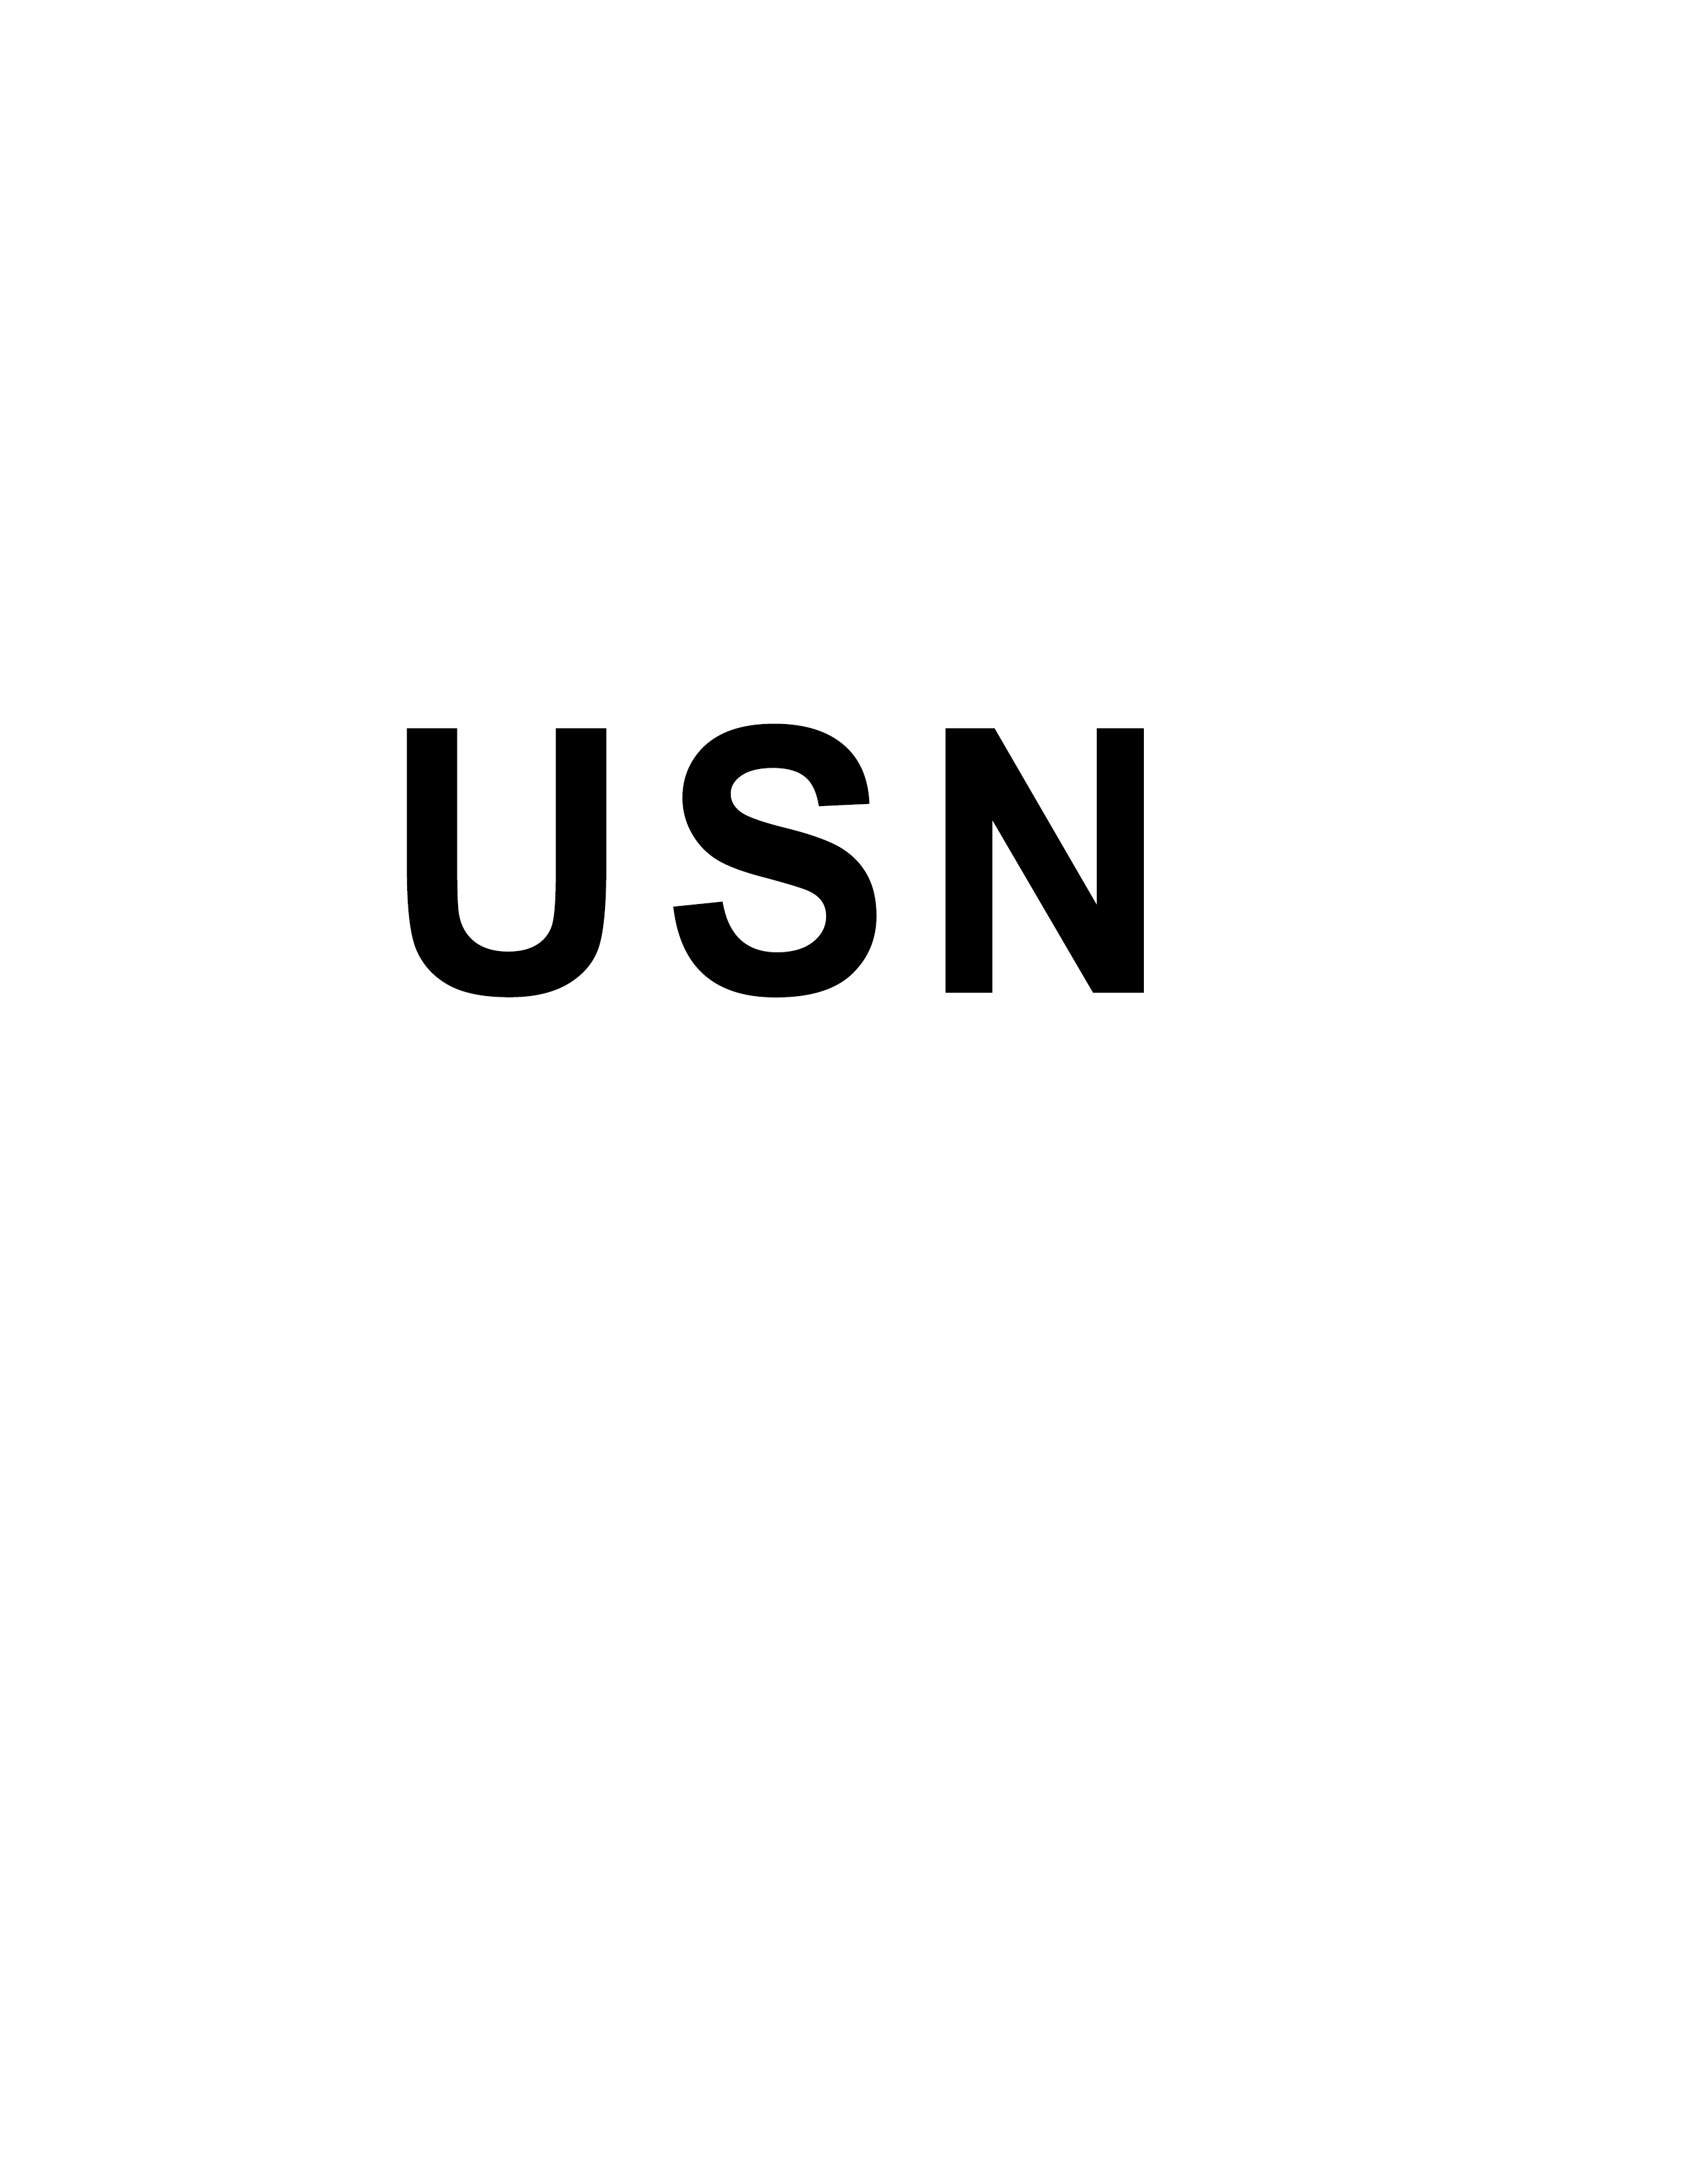 USN Stencil 7.jpg